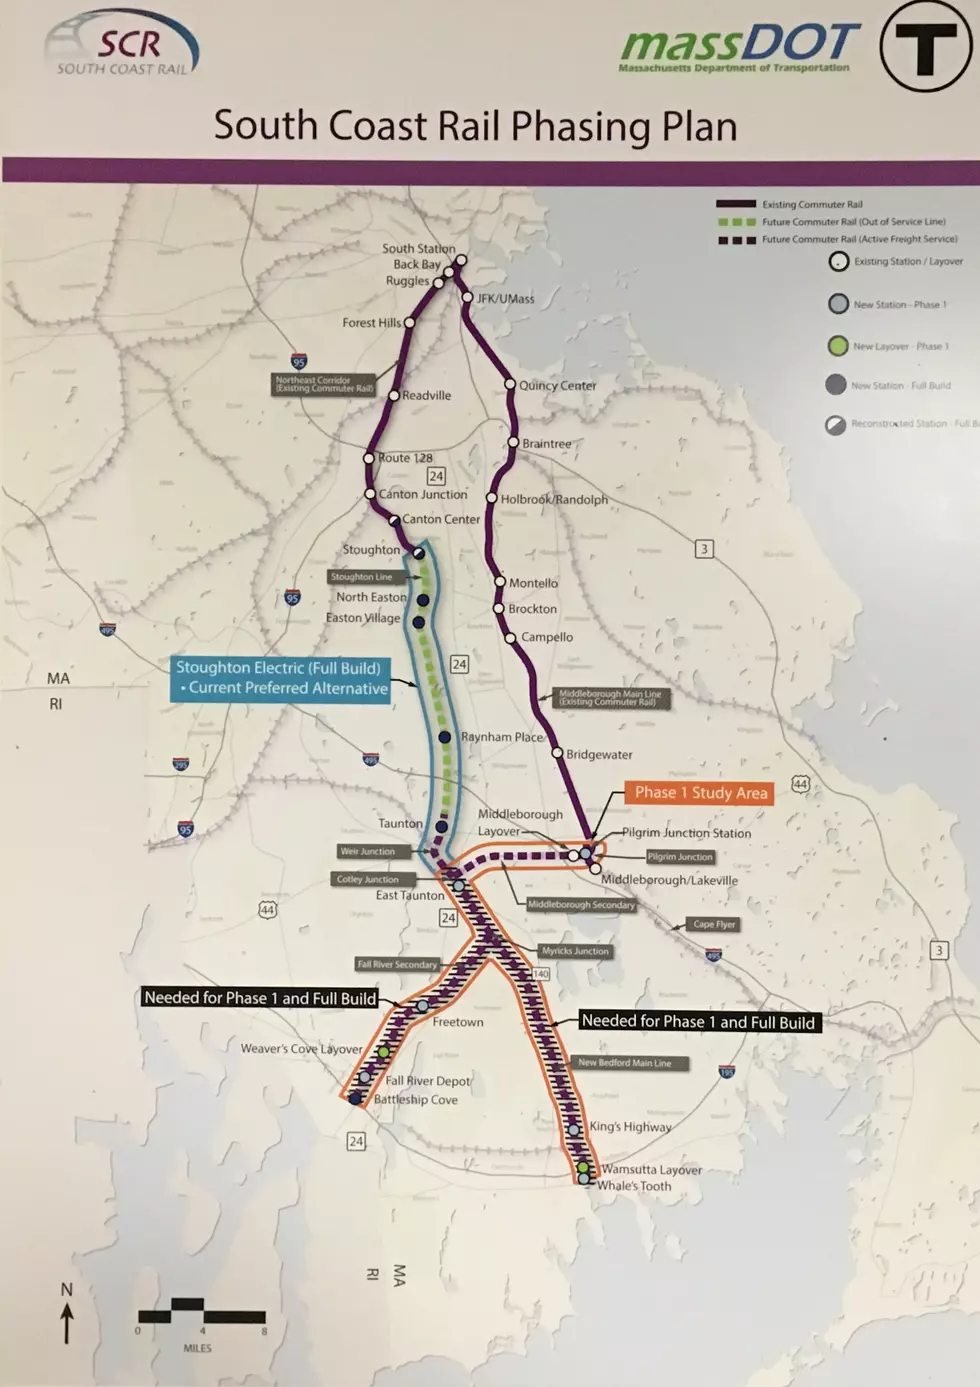 Transportation Secretary Details Plans For South Coast Rail